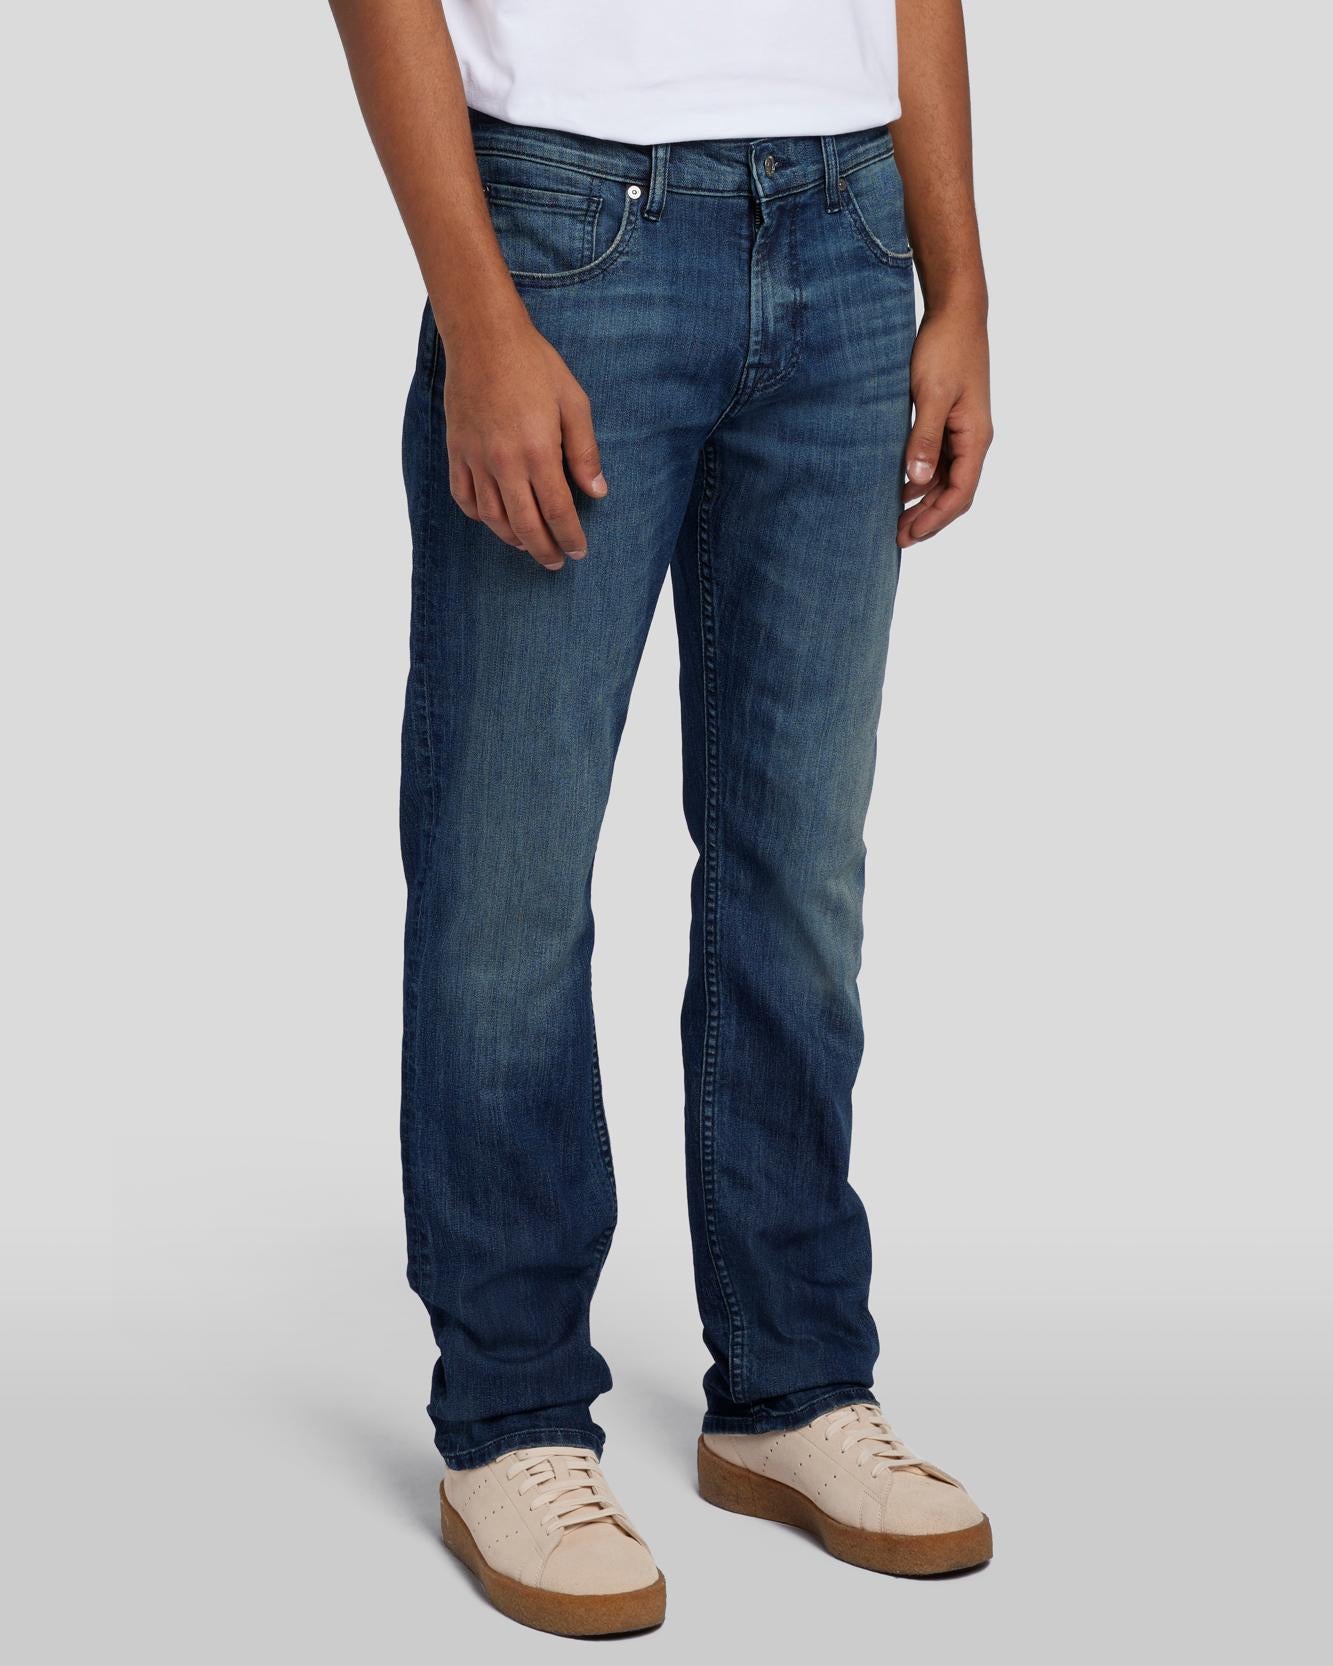 Men's Designer Denim & Jeans